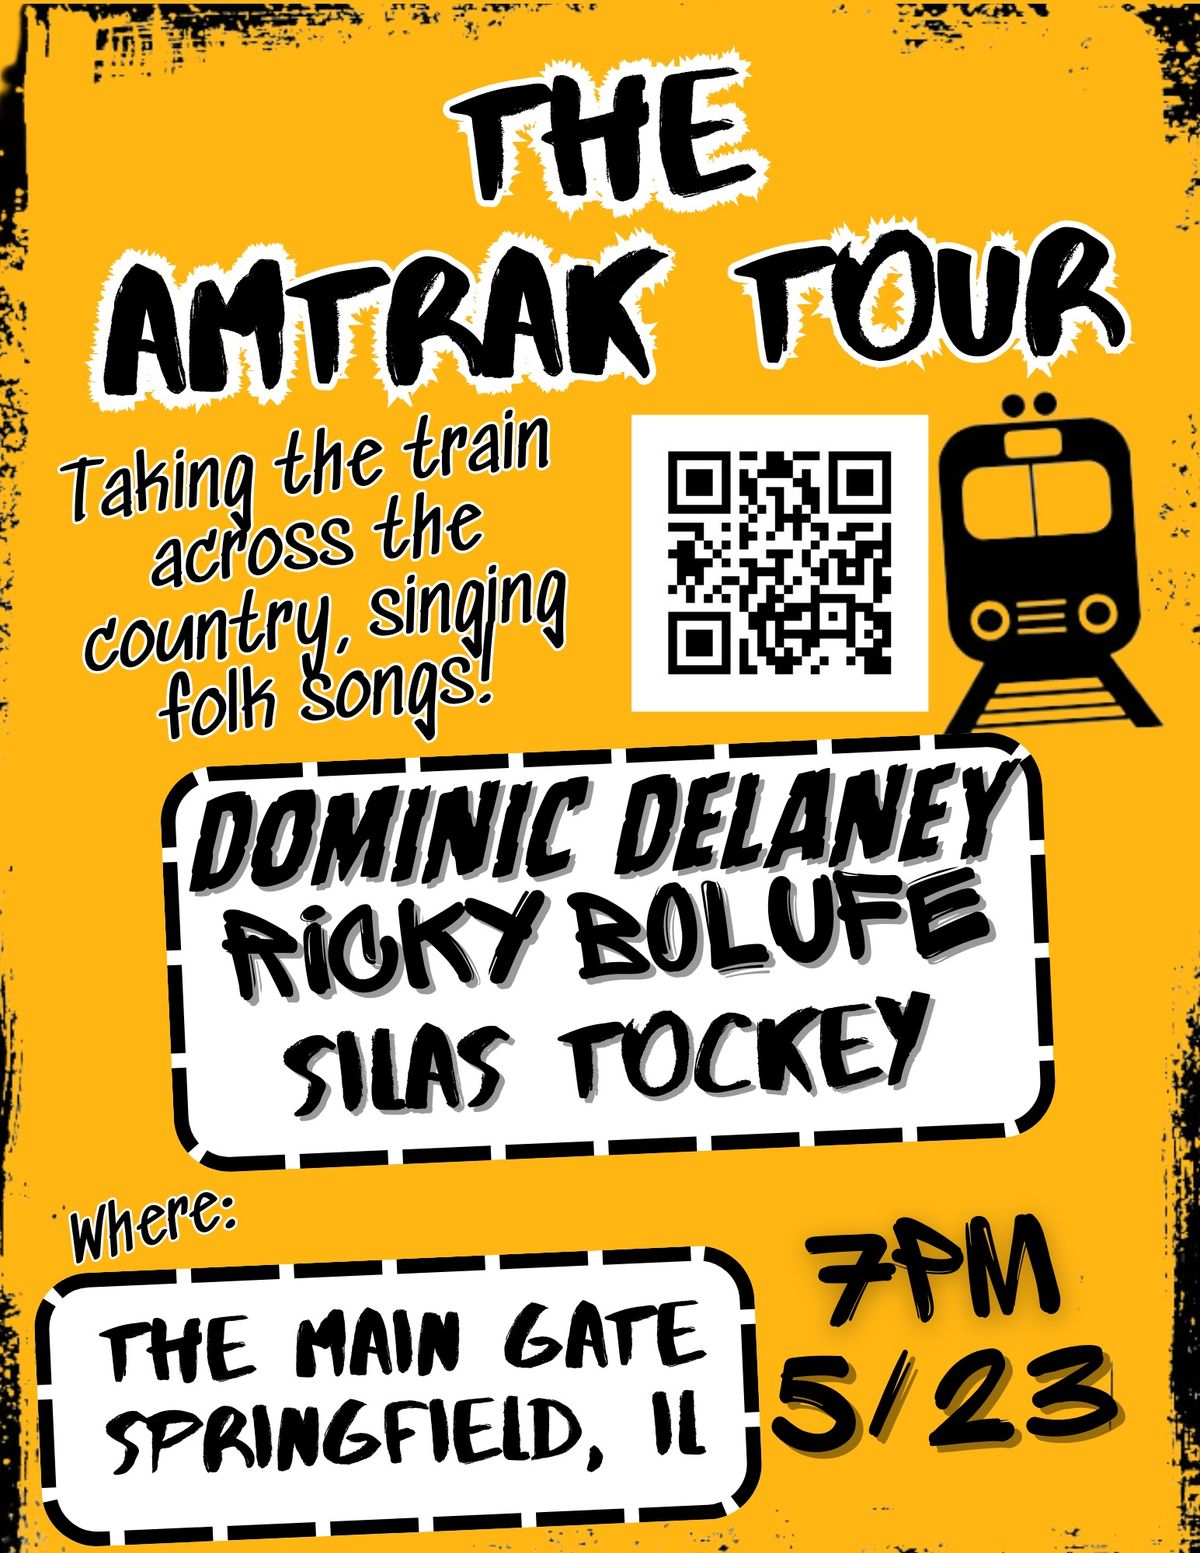 The Amtrak Tour: Dominic DeLaney, Silas Tockey, Ricky Bolufe 